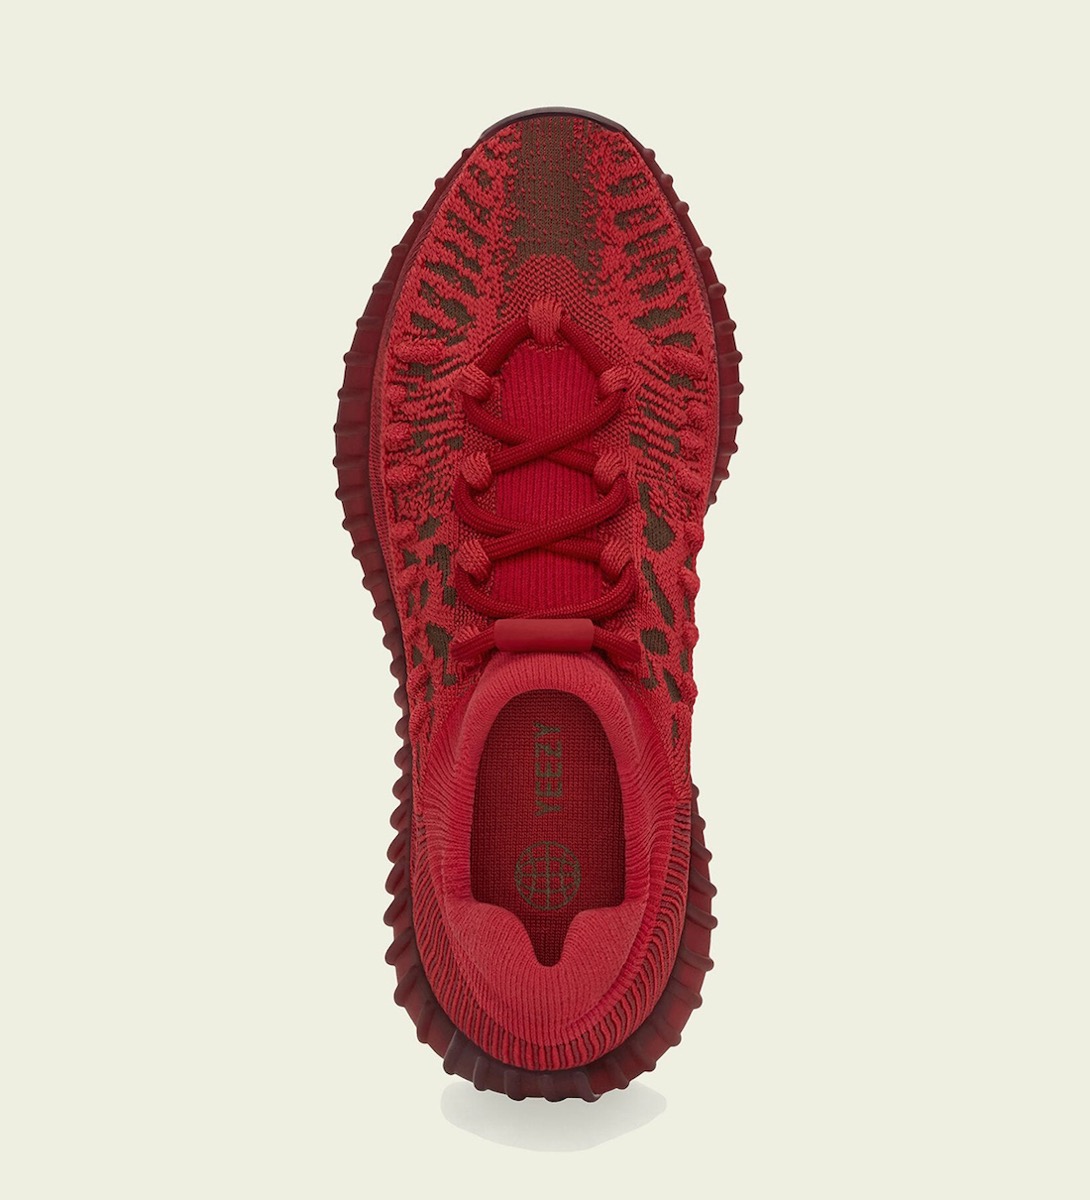 adidas YEEZY BOOST 350 V2 CMPCT “SLATE RED”が国内2月17日に発売予定 